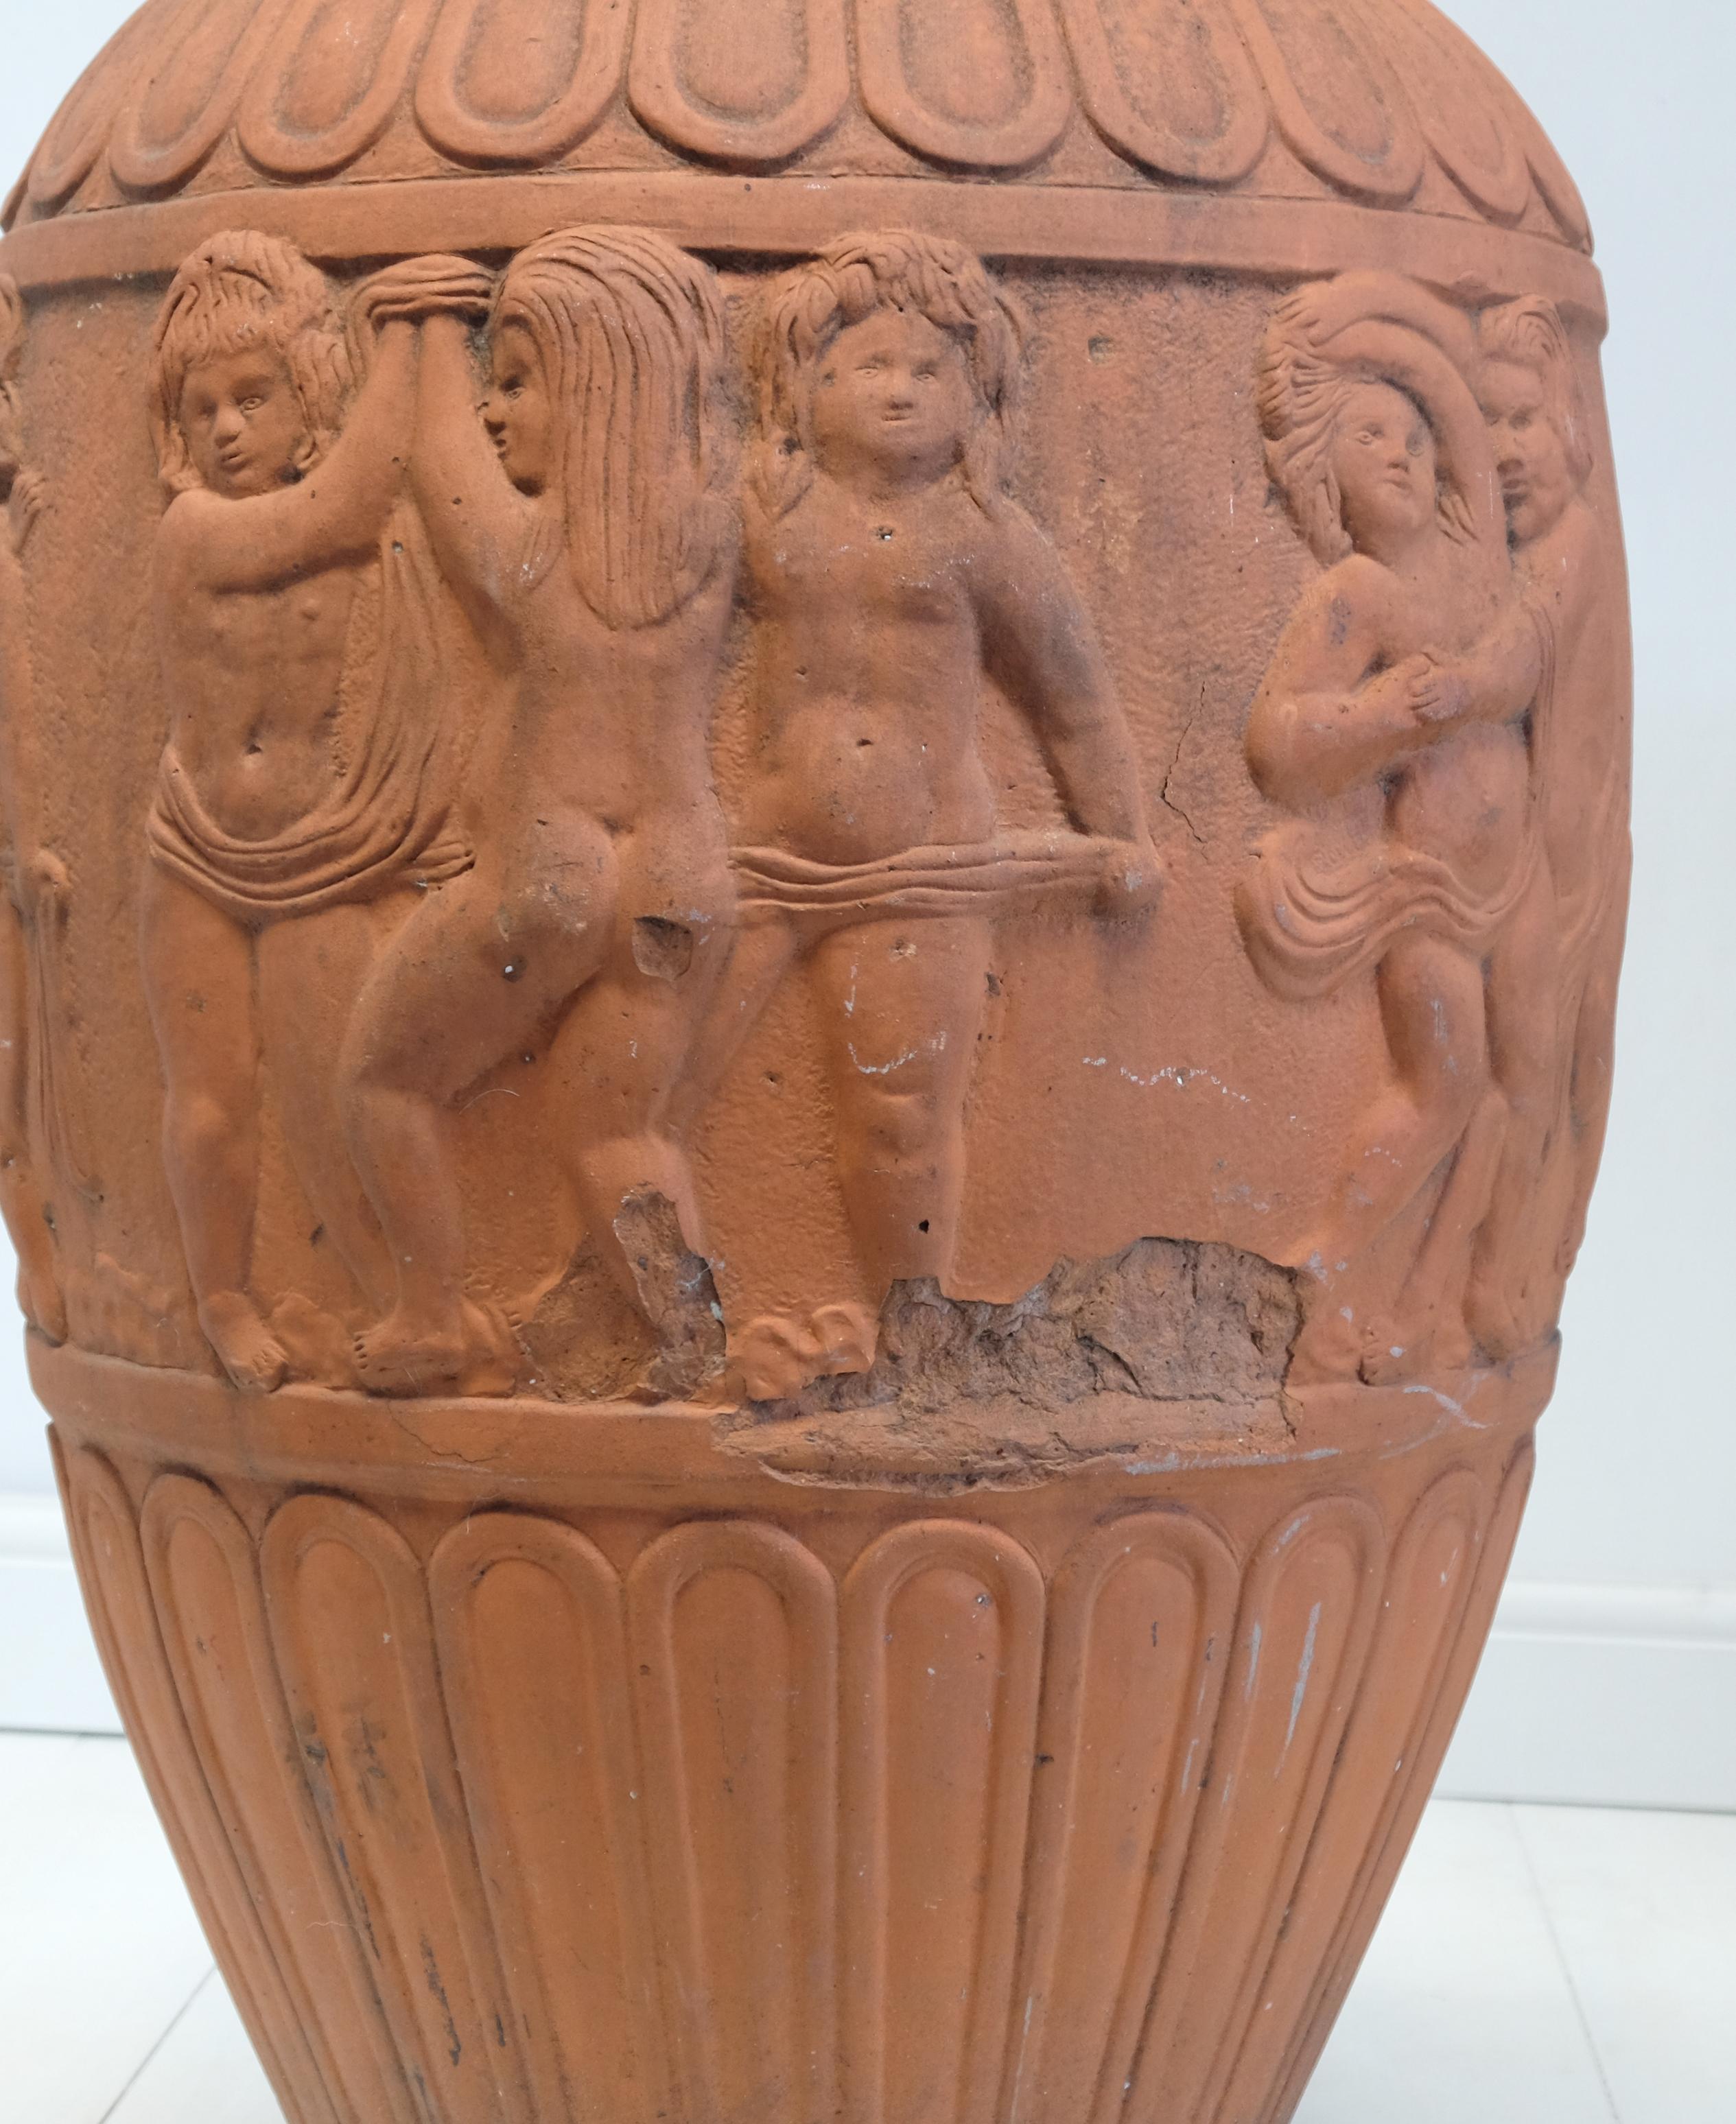 Huge Italian Terracotta Urns, Dancing Putti, Classical, Garden Feature, Outdoor For Sale 1